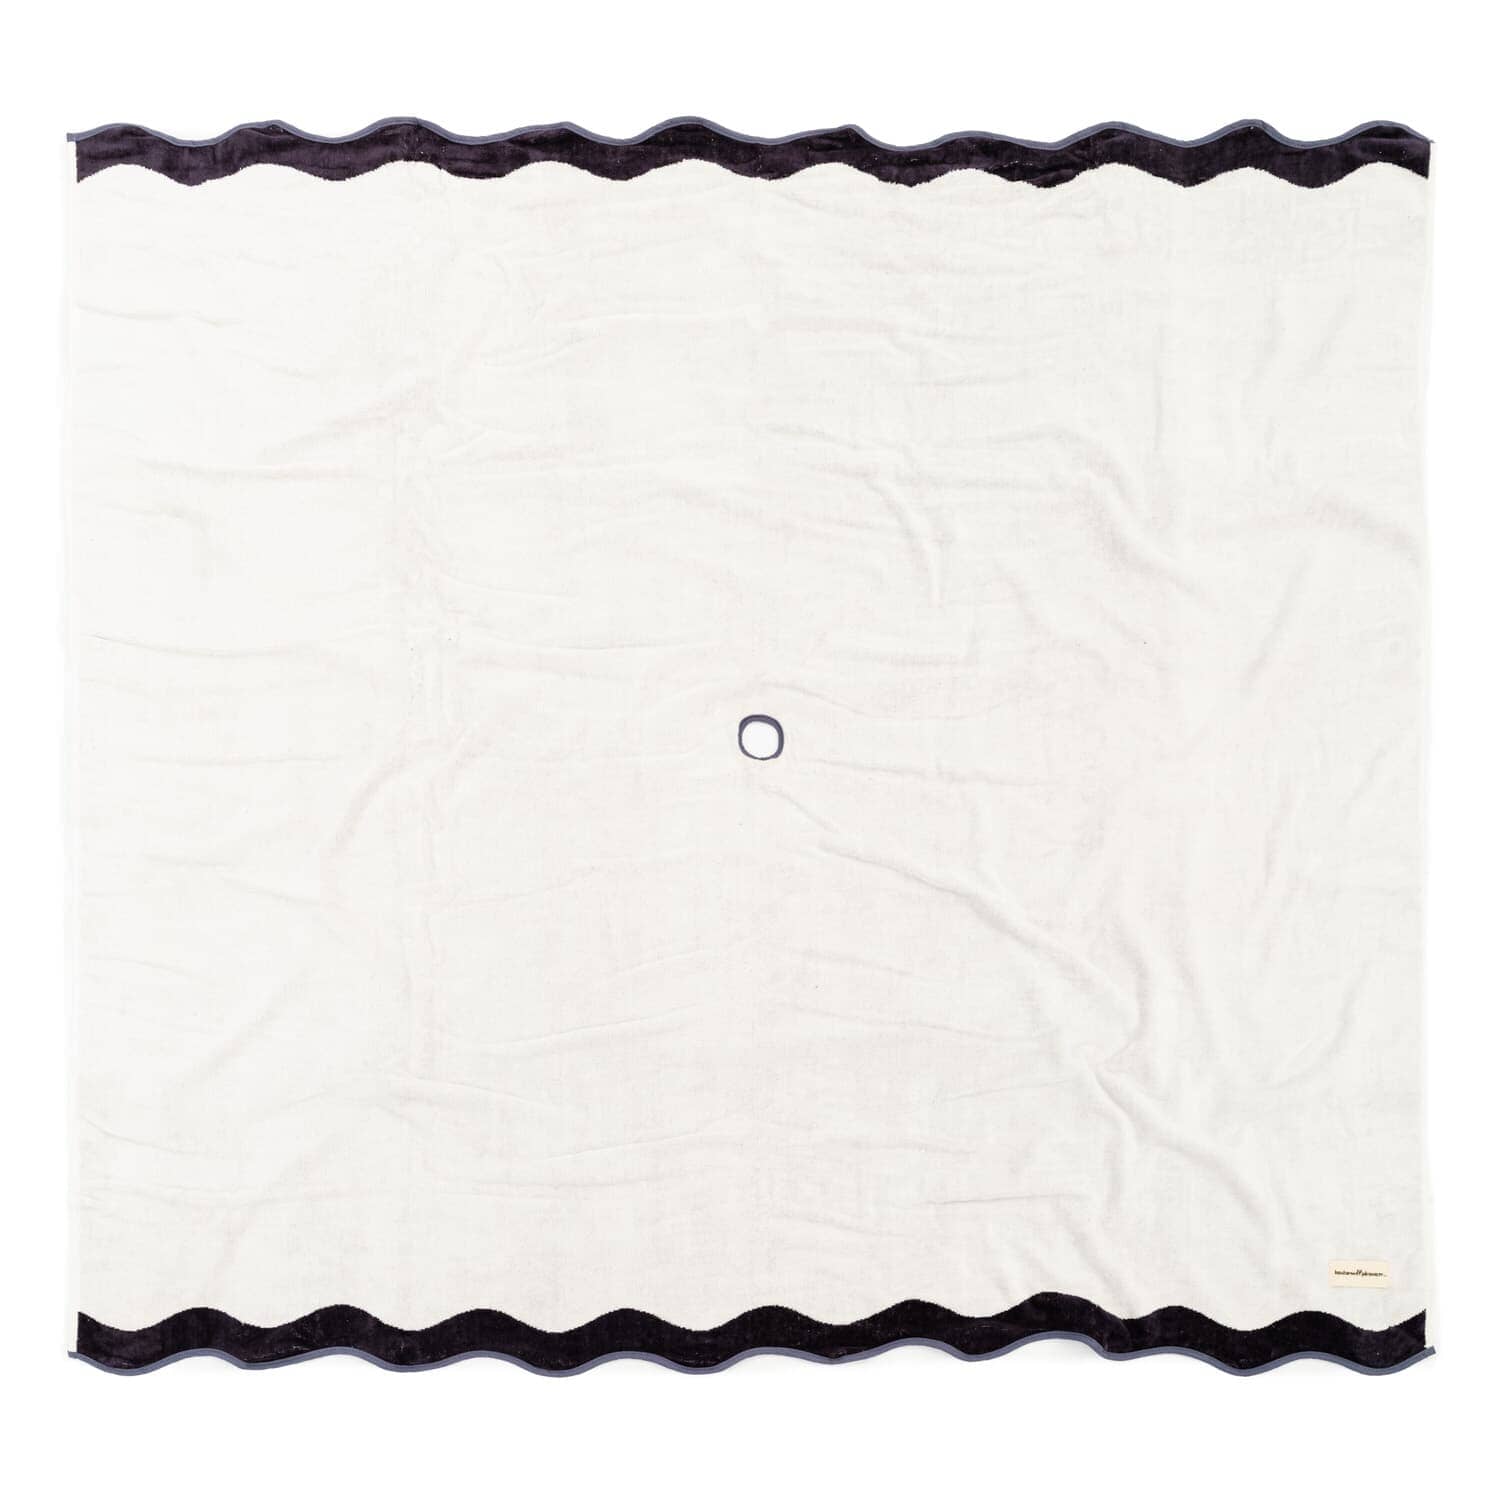 Studio image of white beach blanket